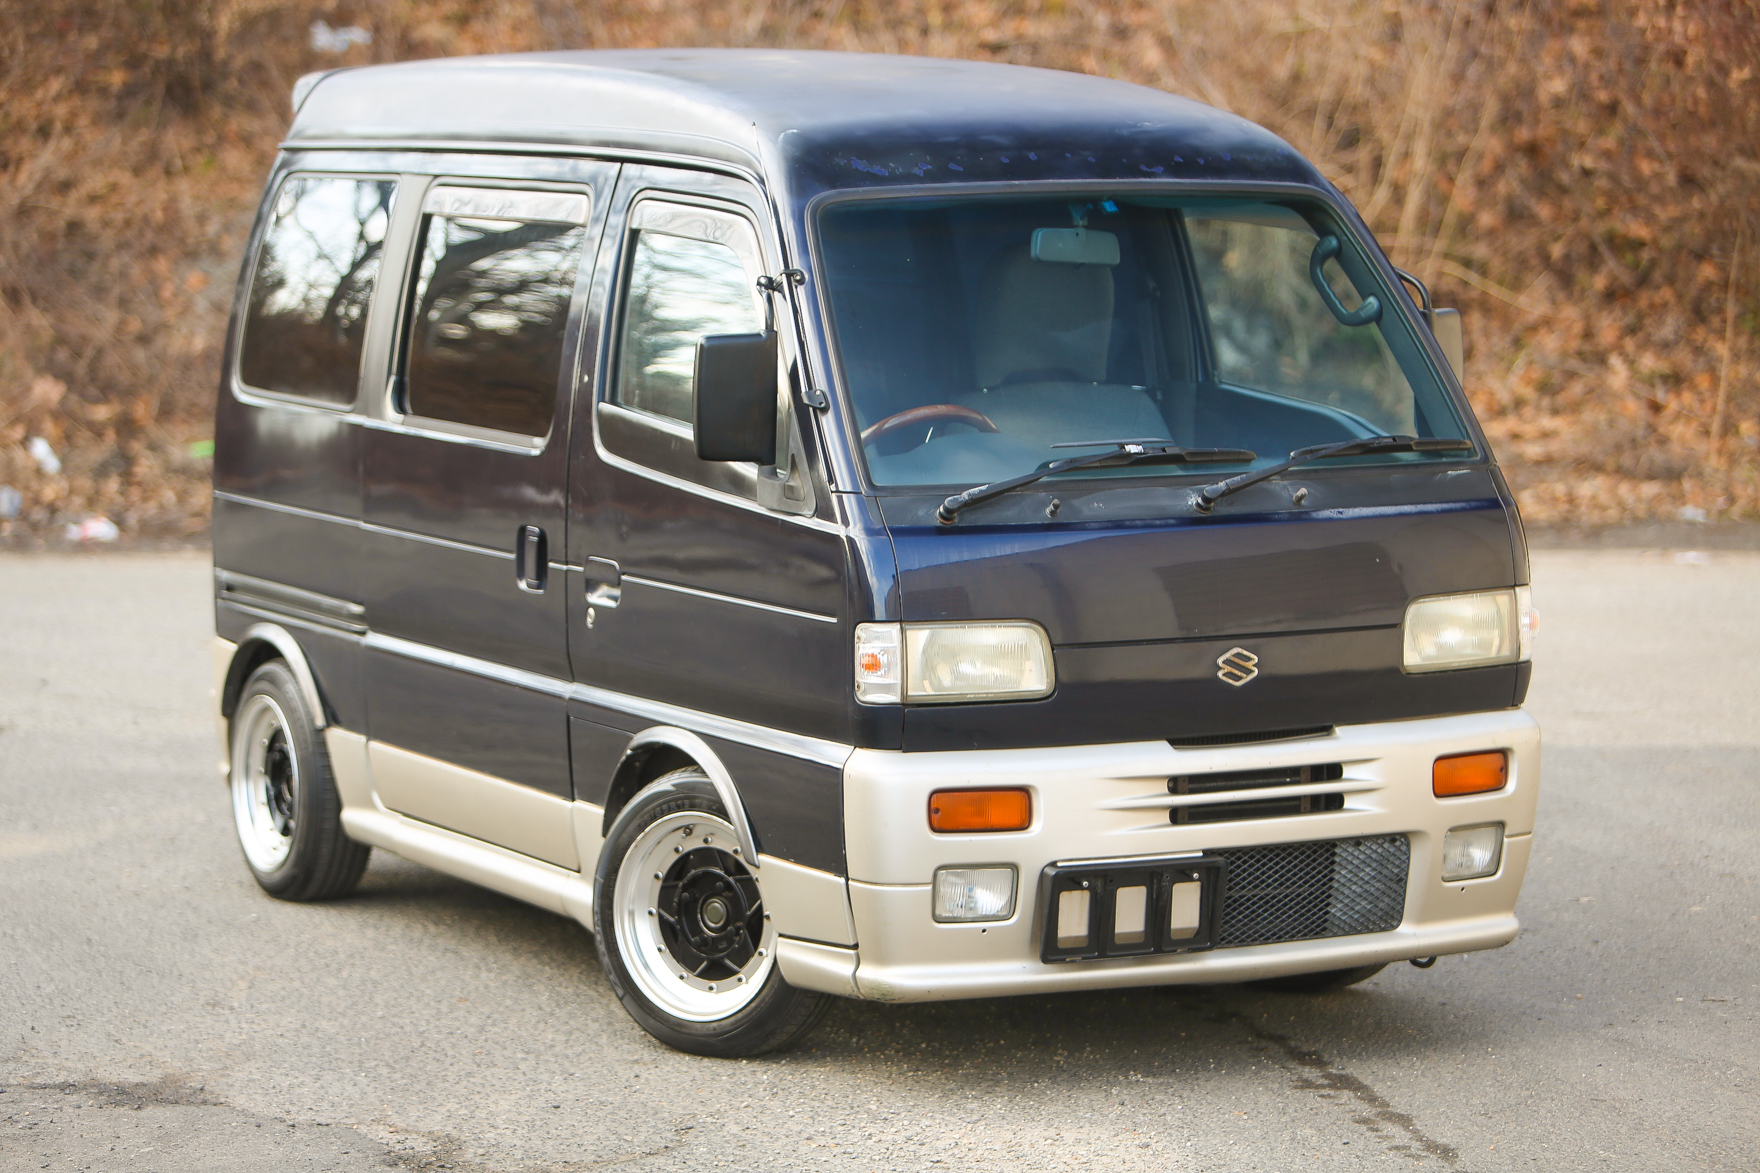 1993 Suzuki Every Turbo - $9,800